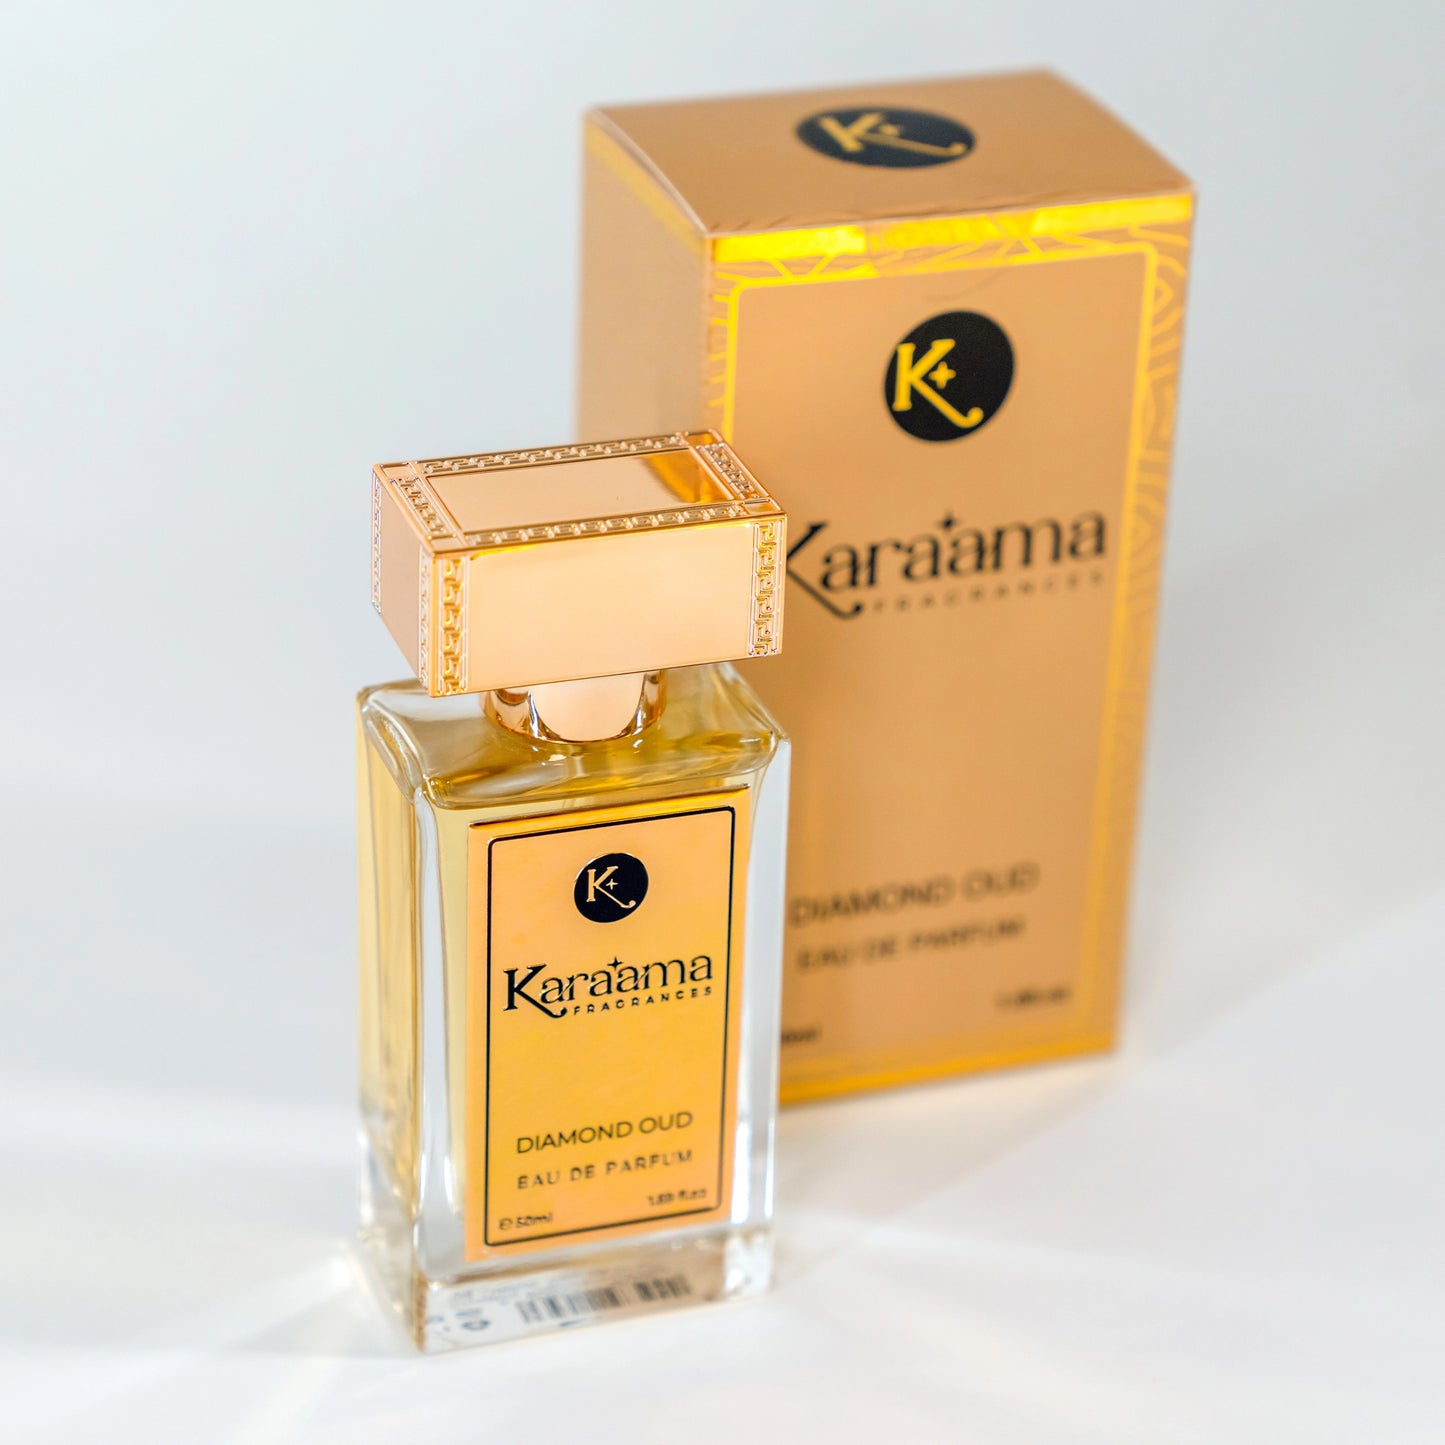 "Elegant Karaama perfume bottle with luxurious golden box packaging, showcasing the trending Diamond Oud Eau de Parfum – a popular, exquisite scent for a sophisticated allure."